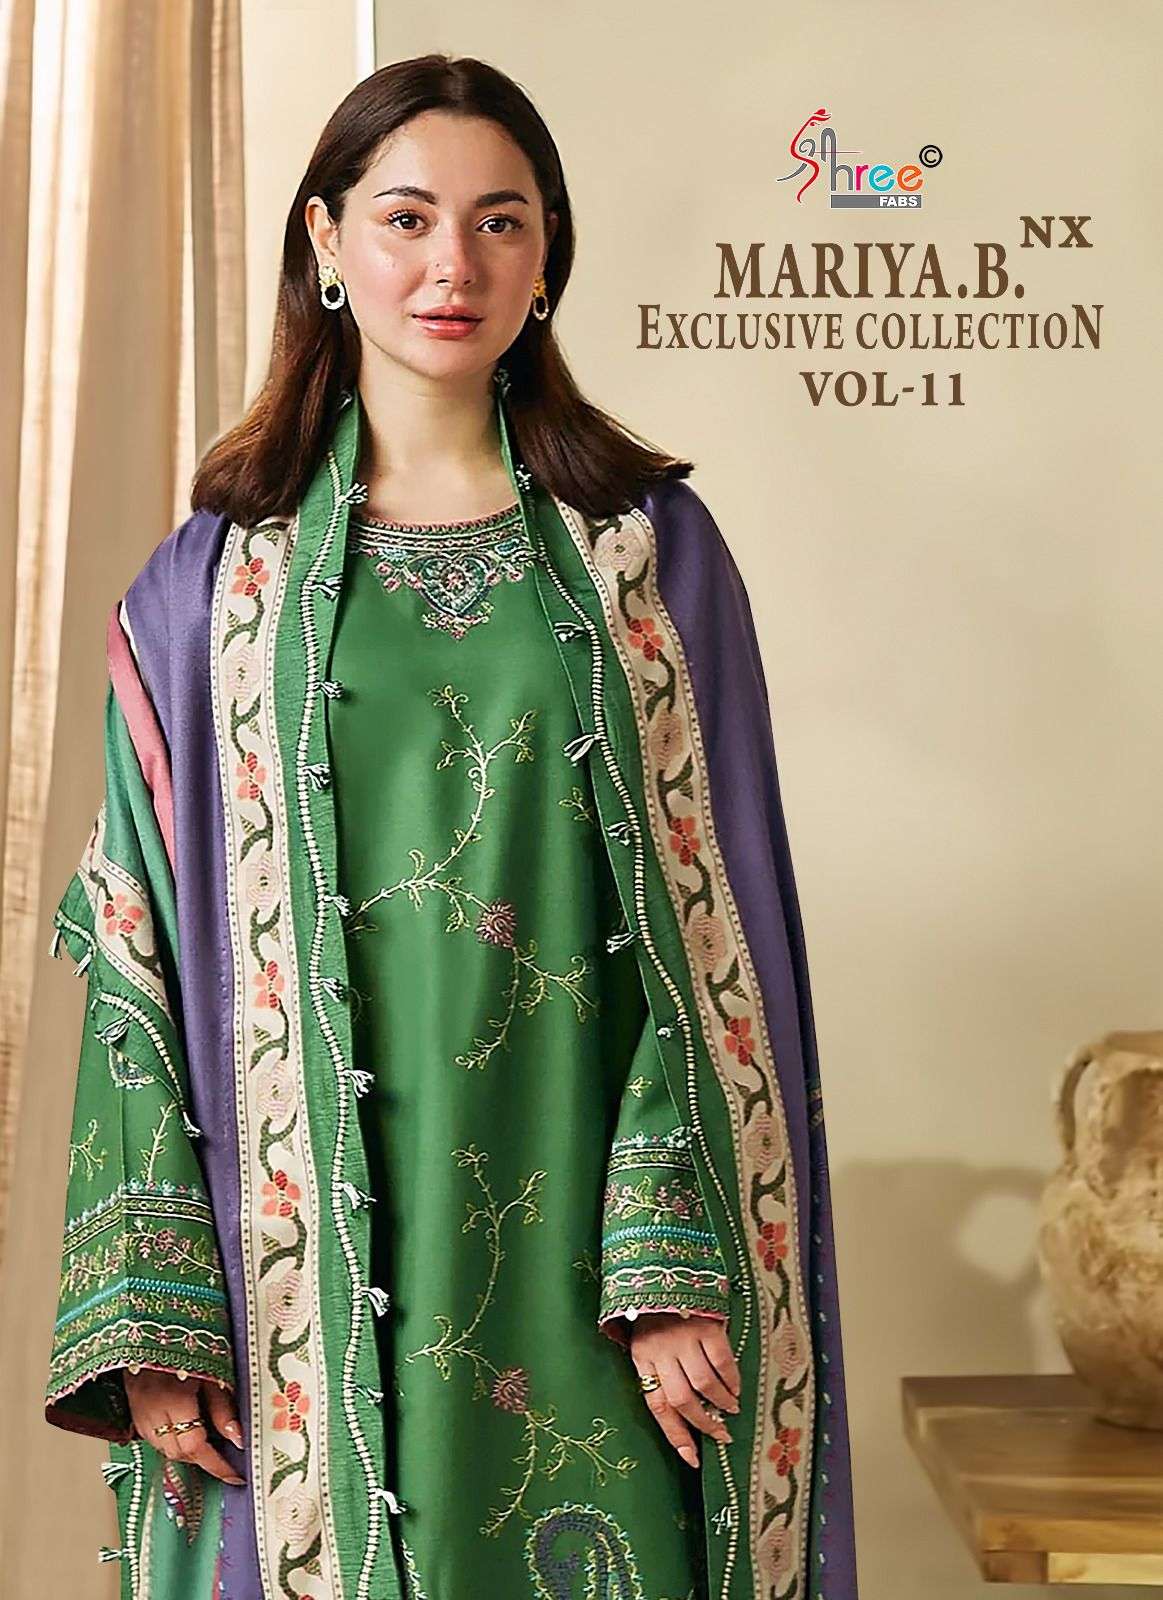 shree fabs maria b vol-11 nx fancy designer pakistani salwar suits catalogue online collection surat gujarat 